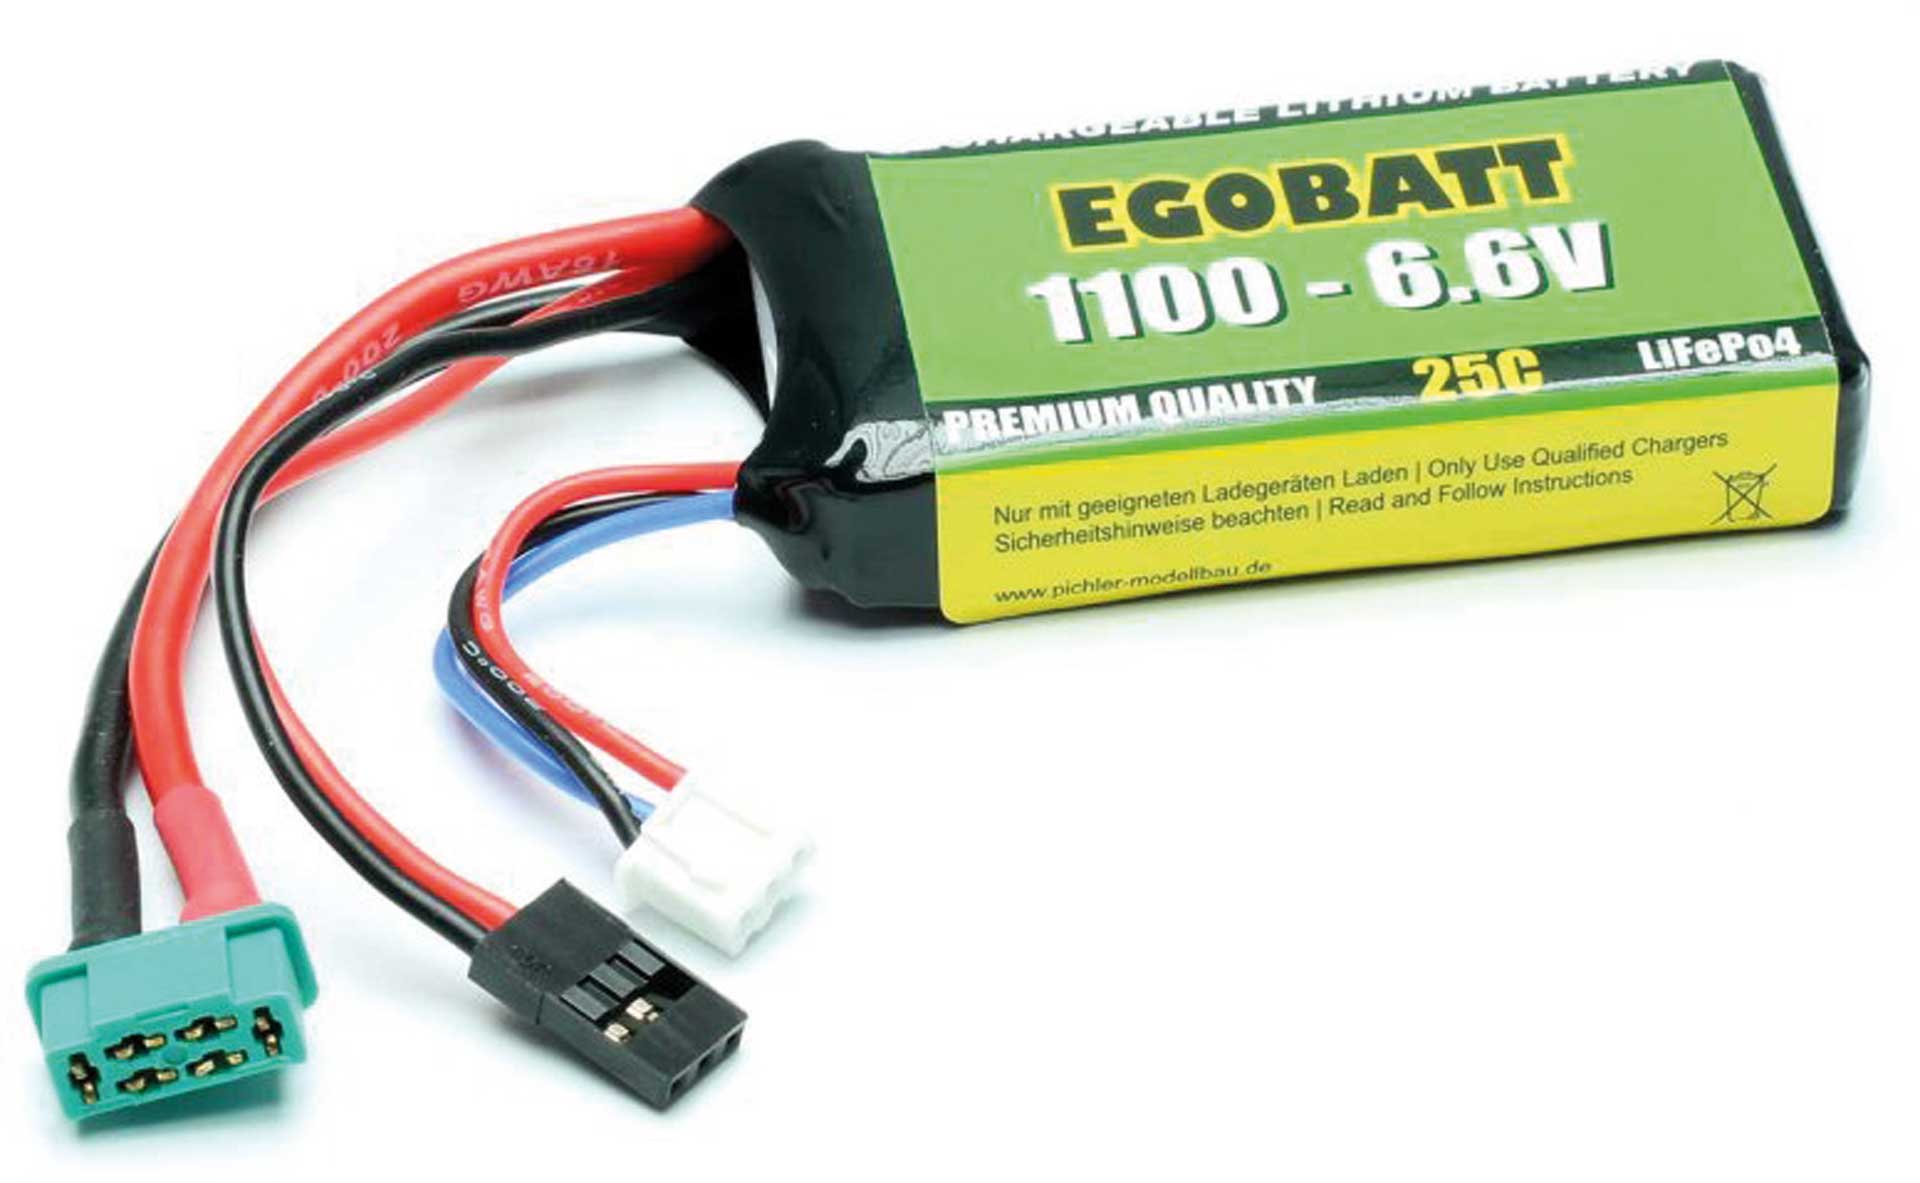 Pichler LiFe battery EGOBATT 1100 - 6.6V (25C)